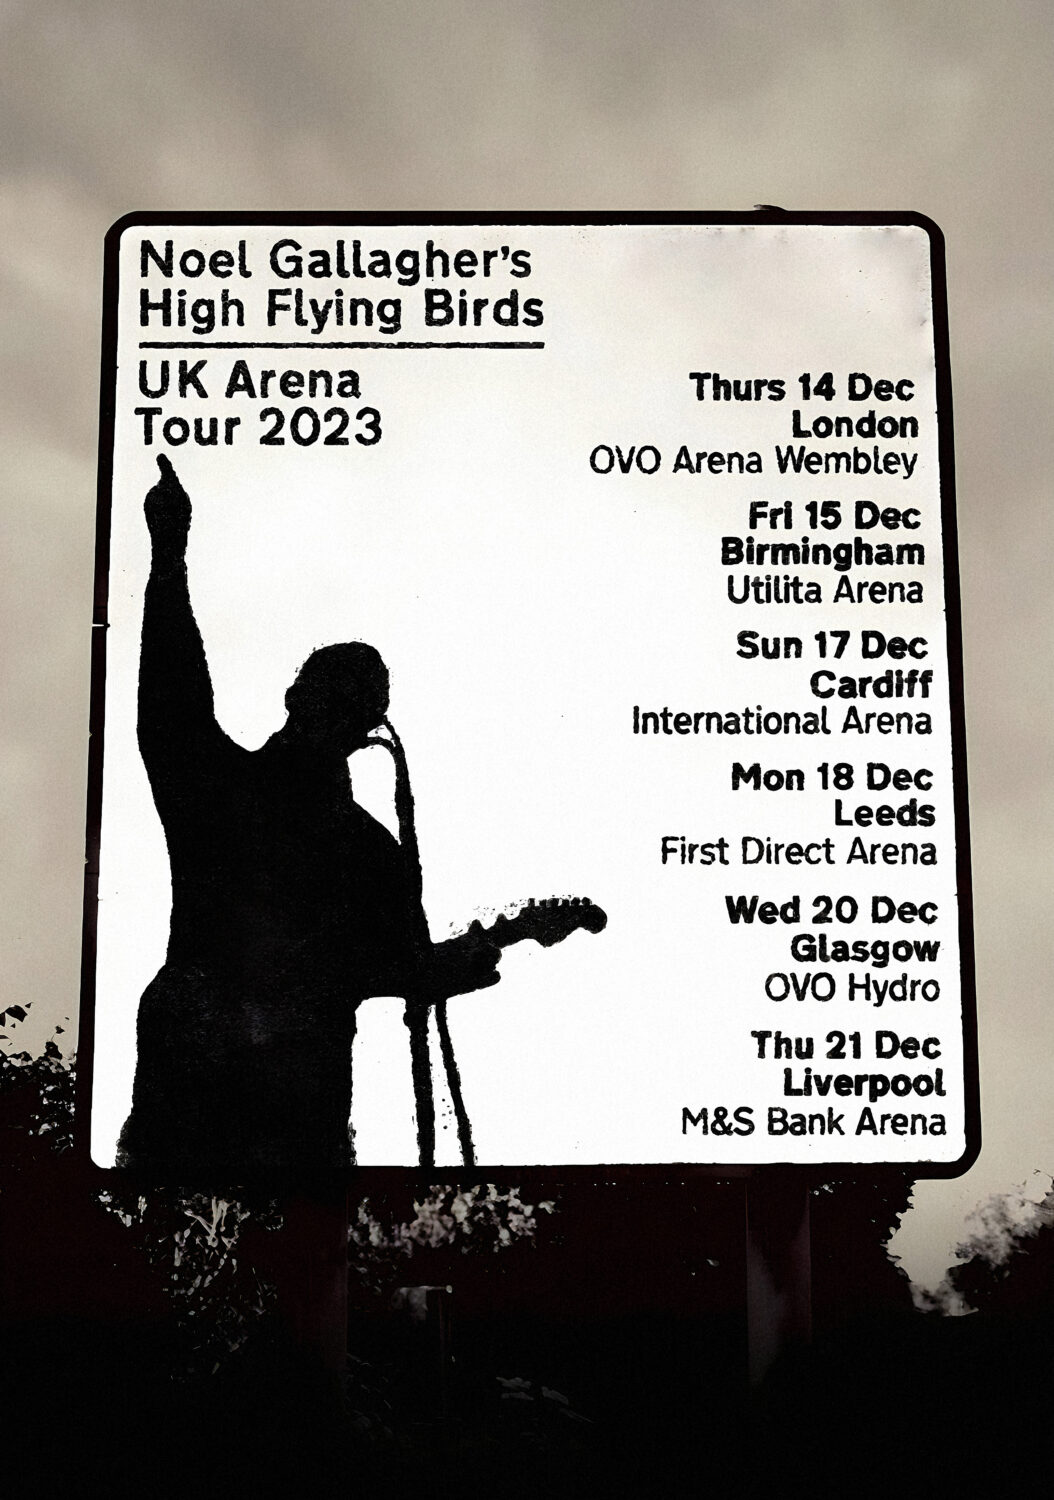 noel gallagher tour 2023 songs list